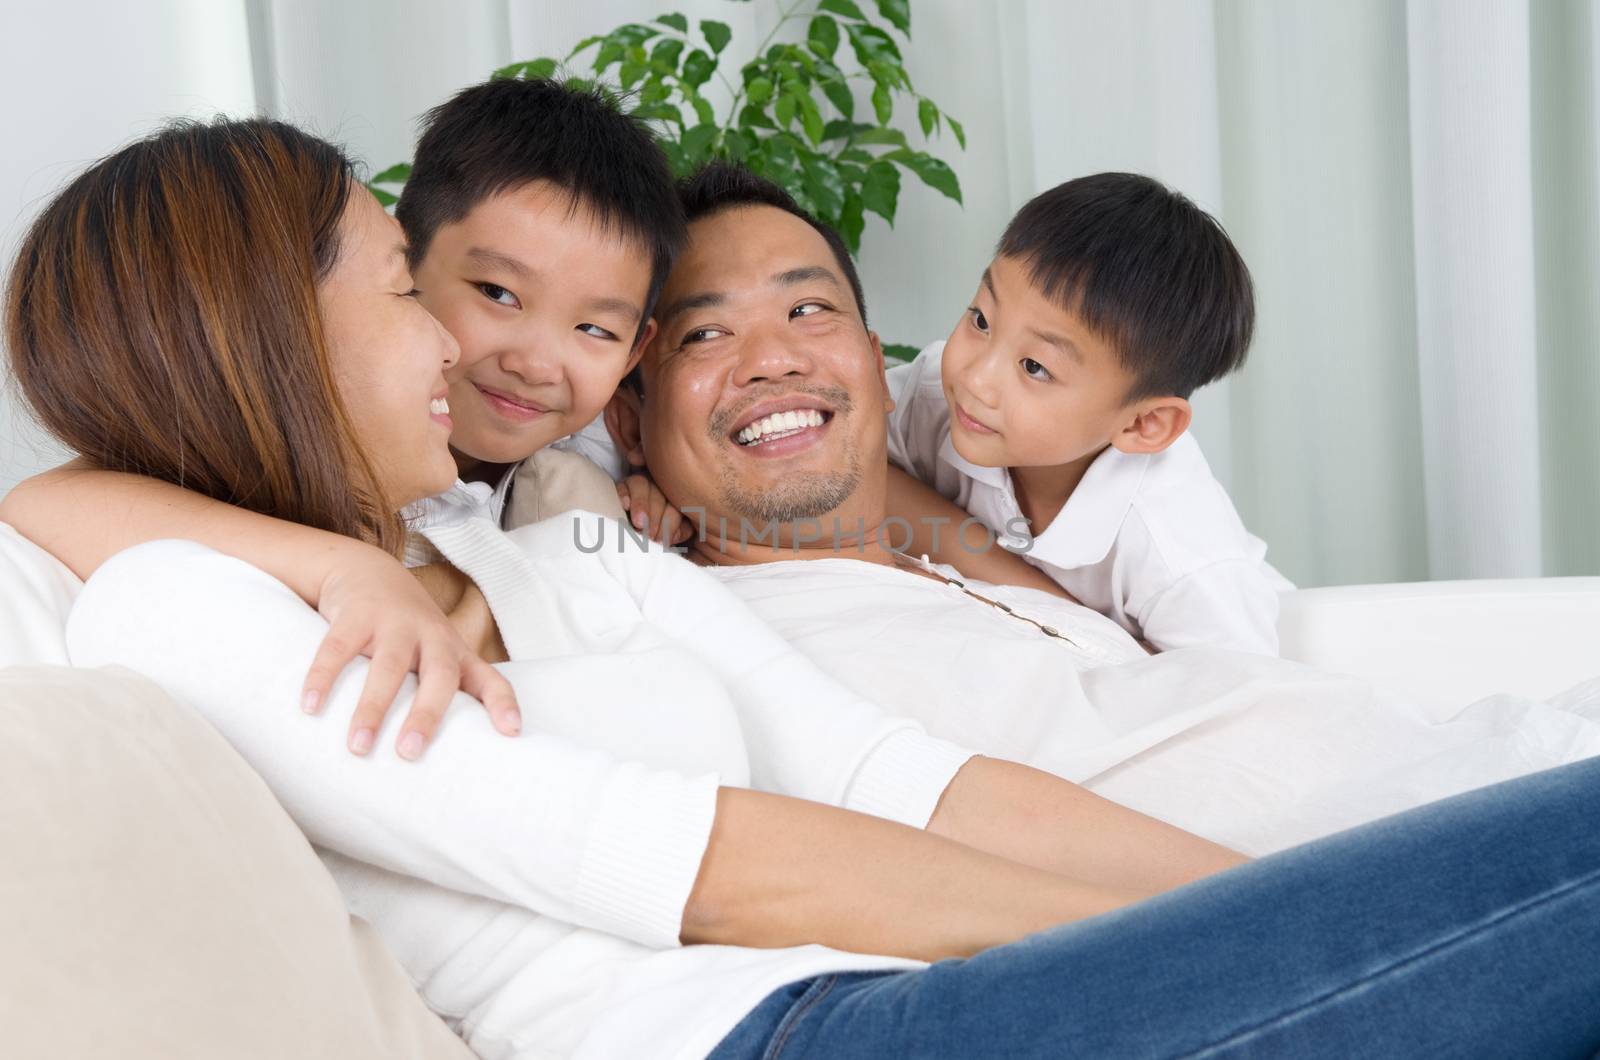  Indoor portrait of asian family